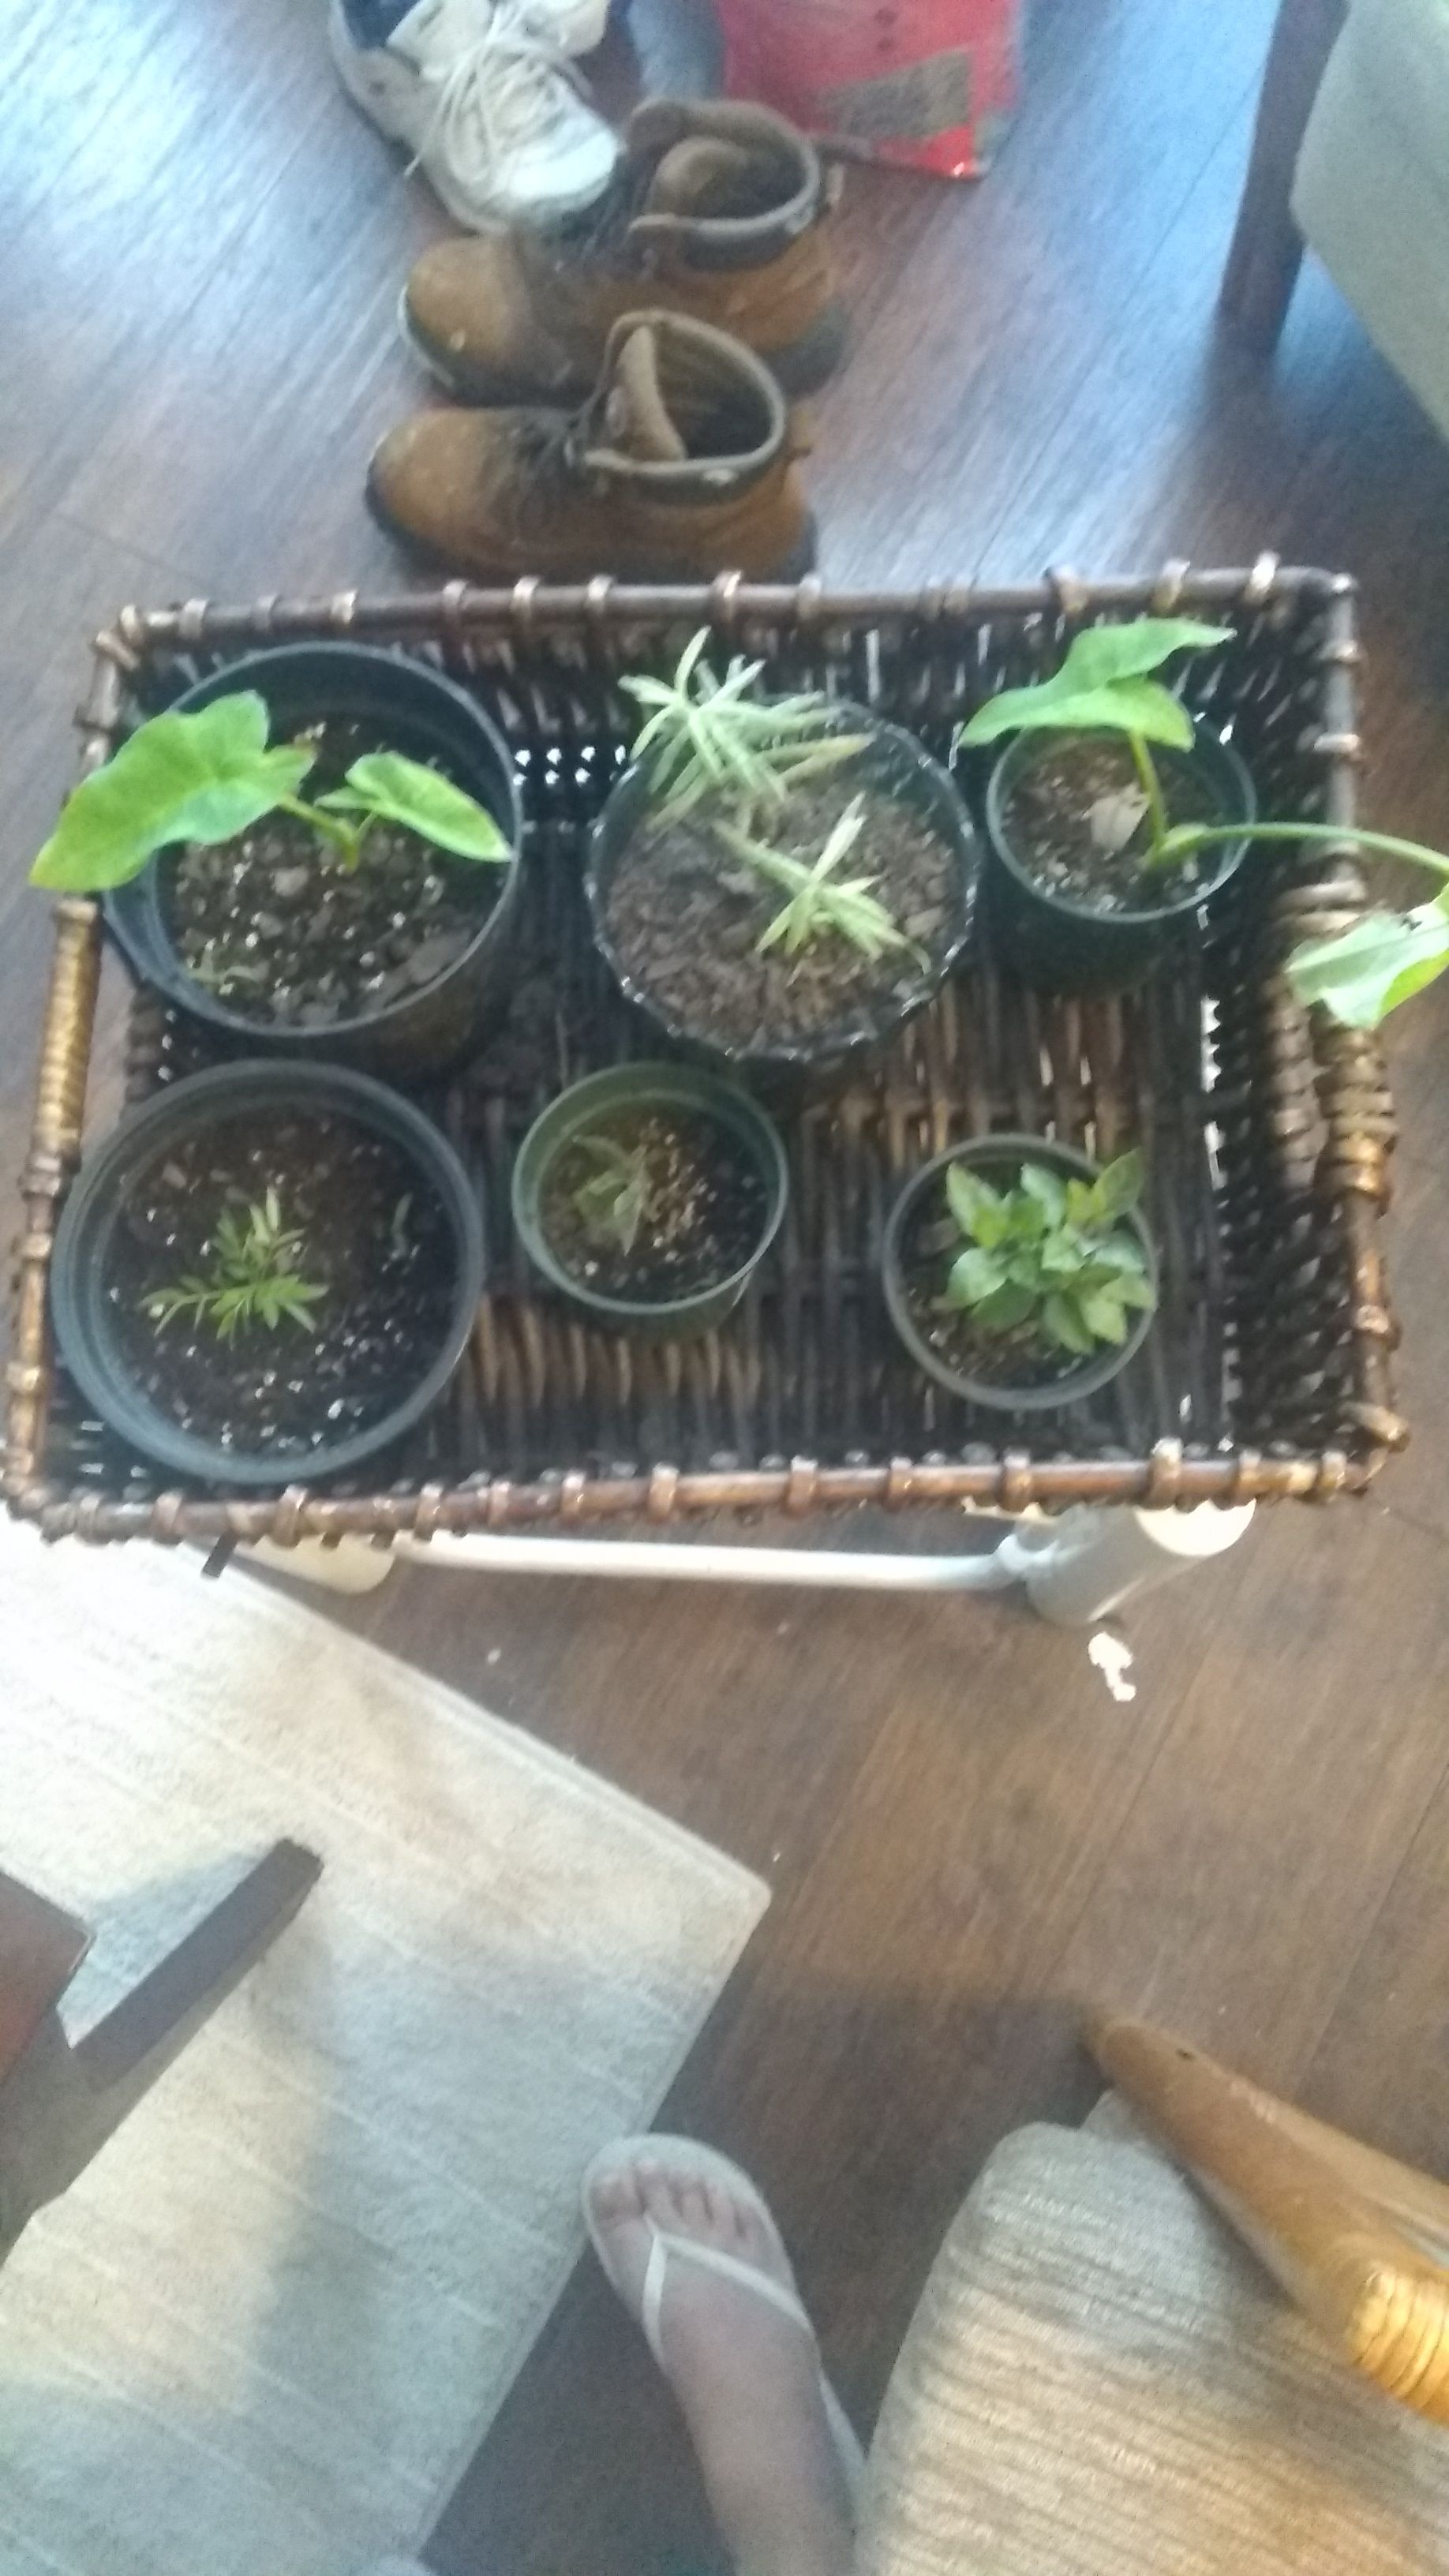 A basket of Plants